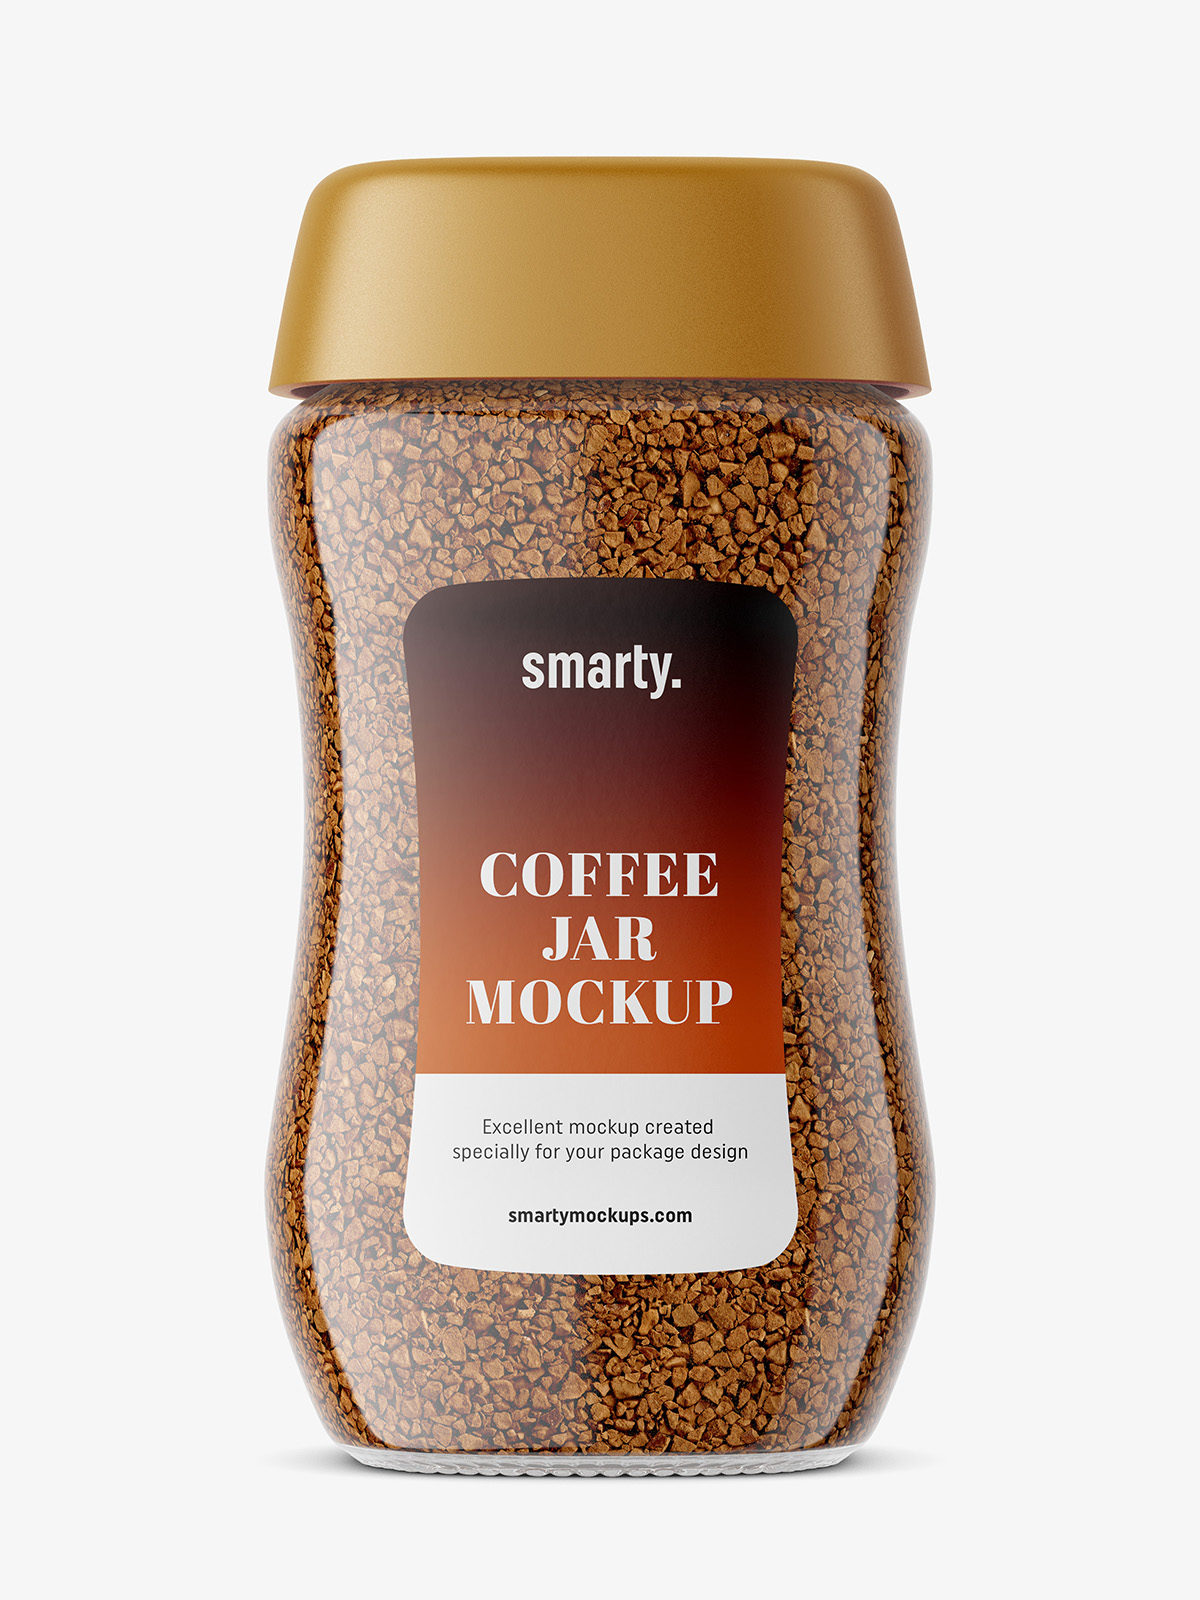 https://smartymockups.com/wp-content/uploads/2017/02/Coffee_Jar_Mockup_2ok.jpg